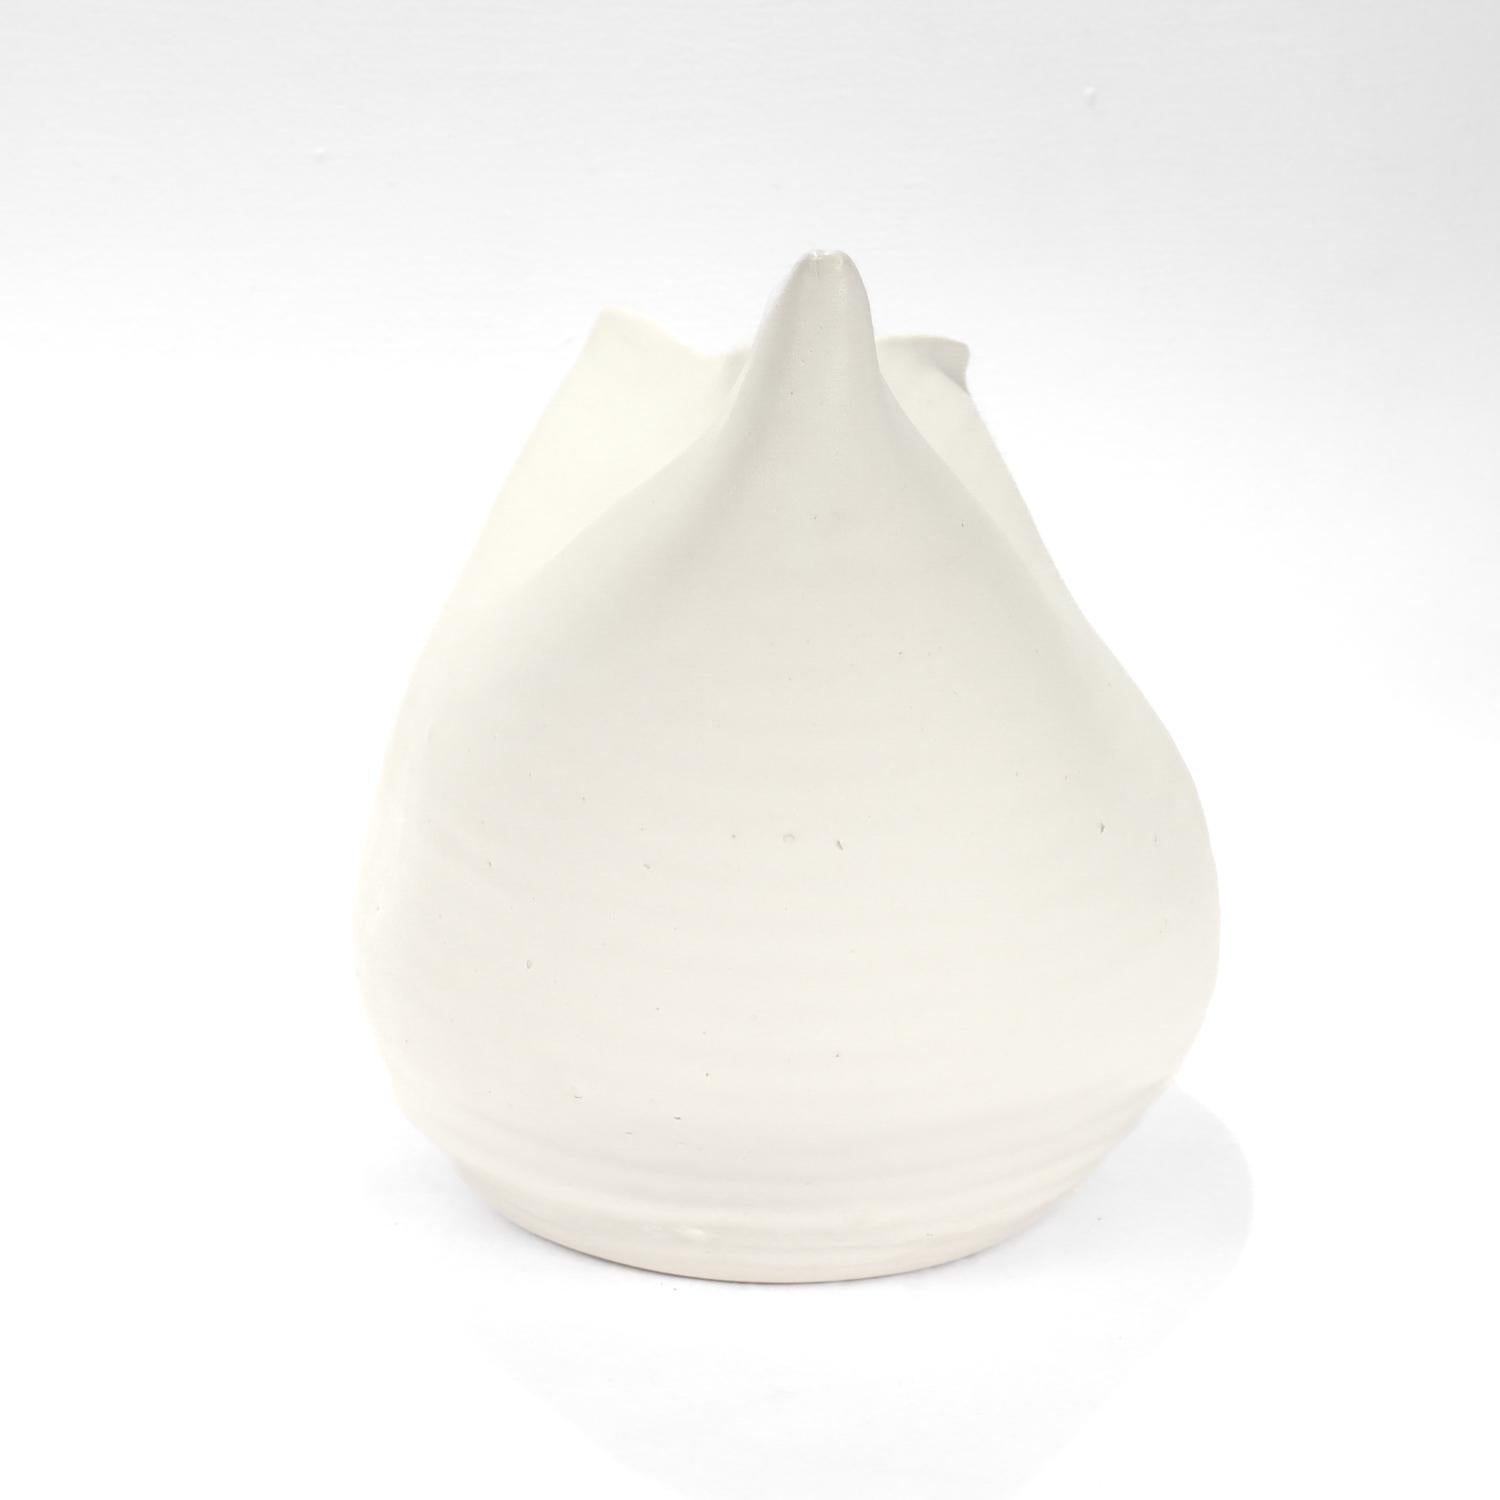 Donna Karan Lenox Signed Limited Edition Embrace Porcelain Vase / Vessel In Good Condition For Sale In Philadelphia, PA